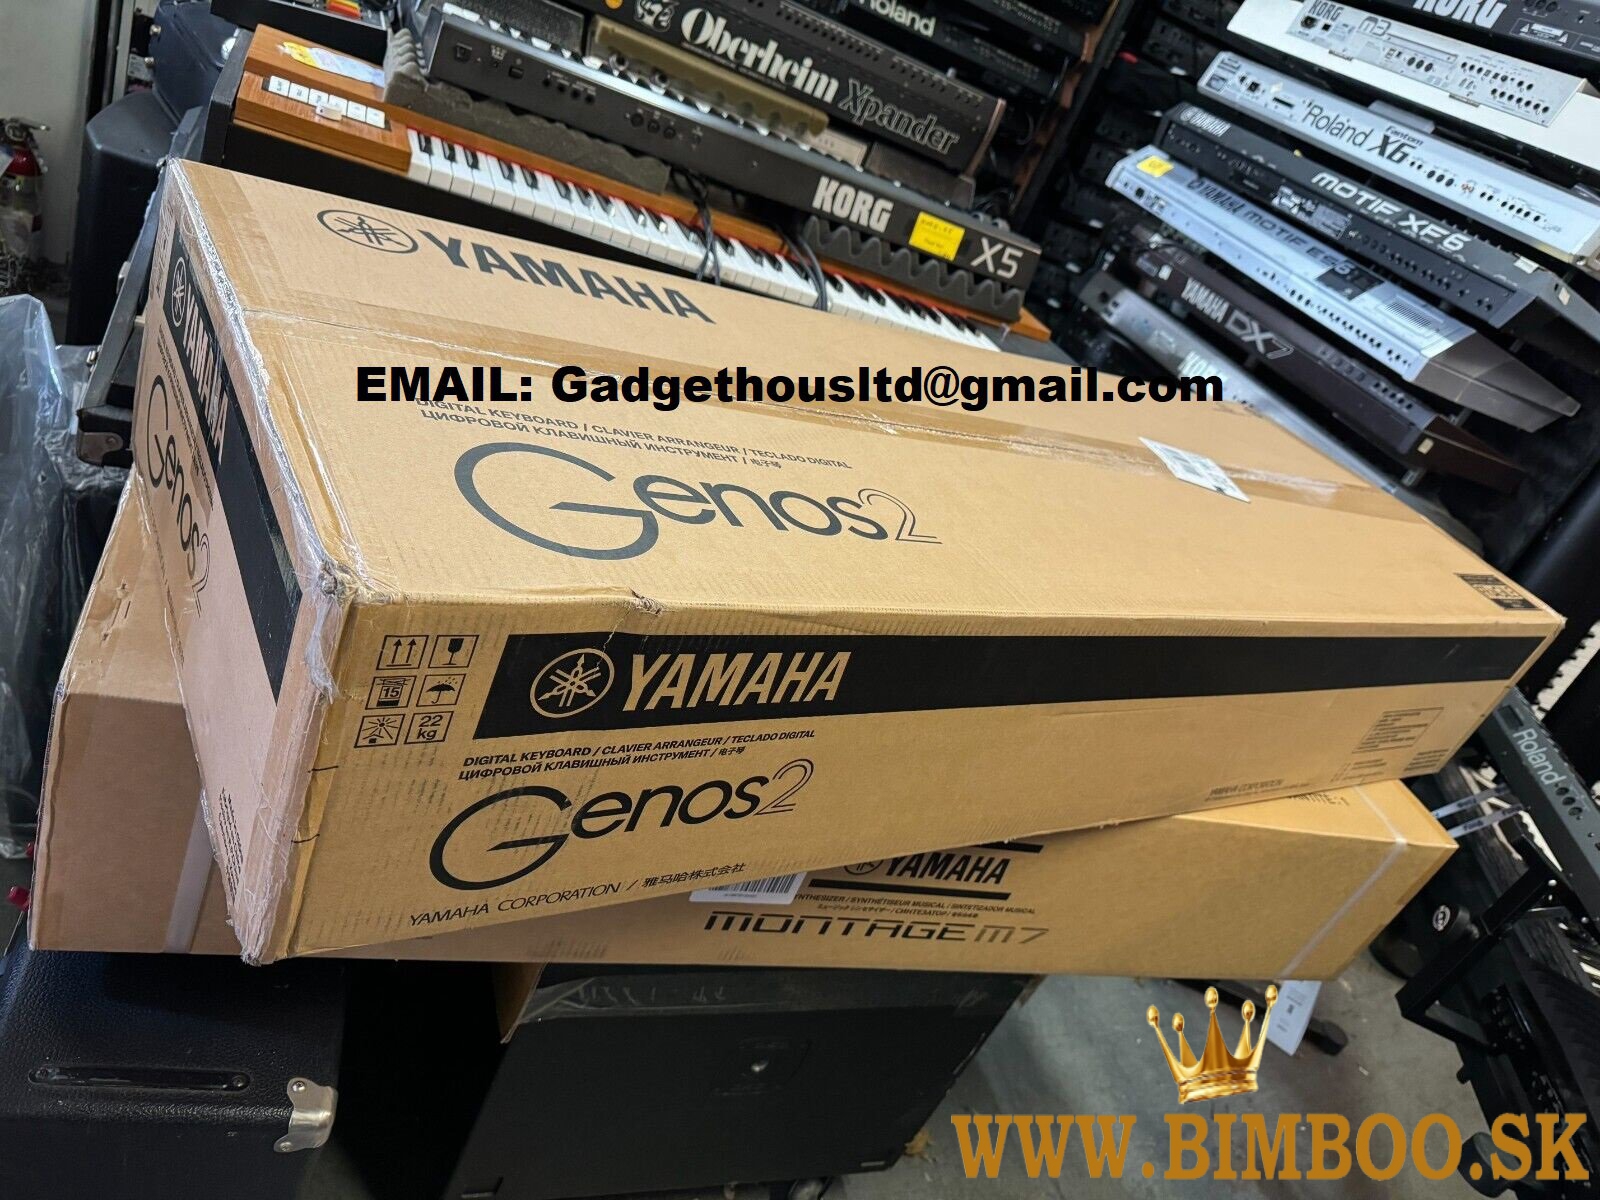 Yamaha Genos2 76-key, Yamaha Genos , PSR-A5000, Yamaha PSR-SX900, Korg Pa5X, Korg Pa4X, Korg PA-1000